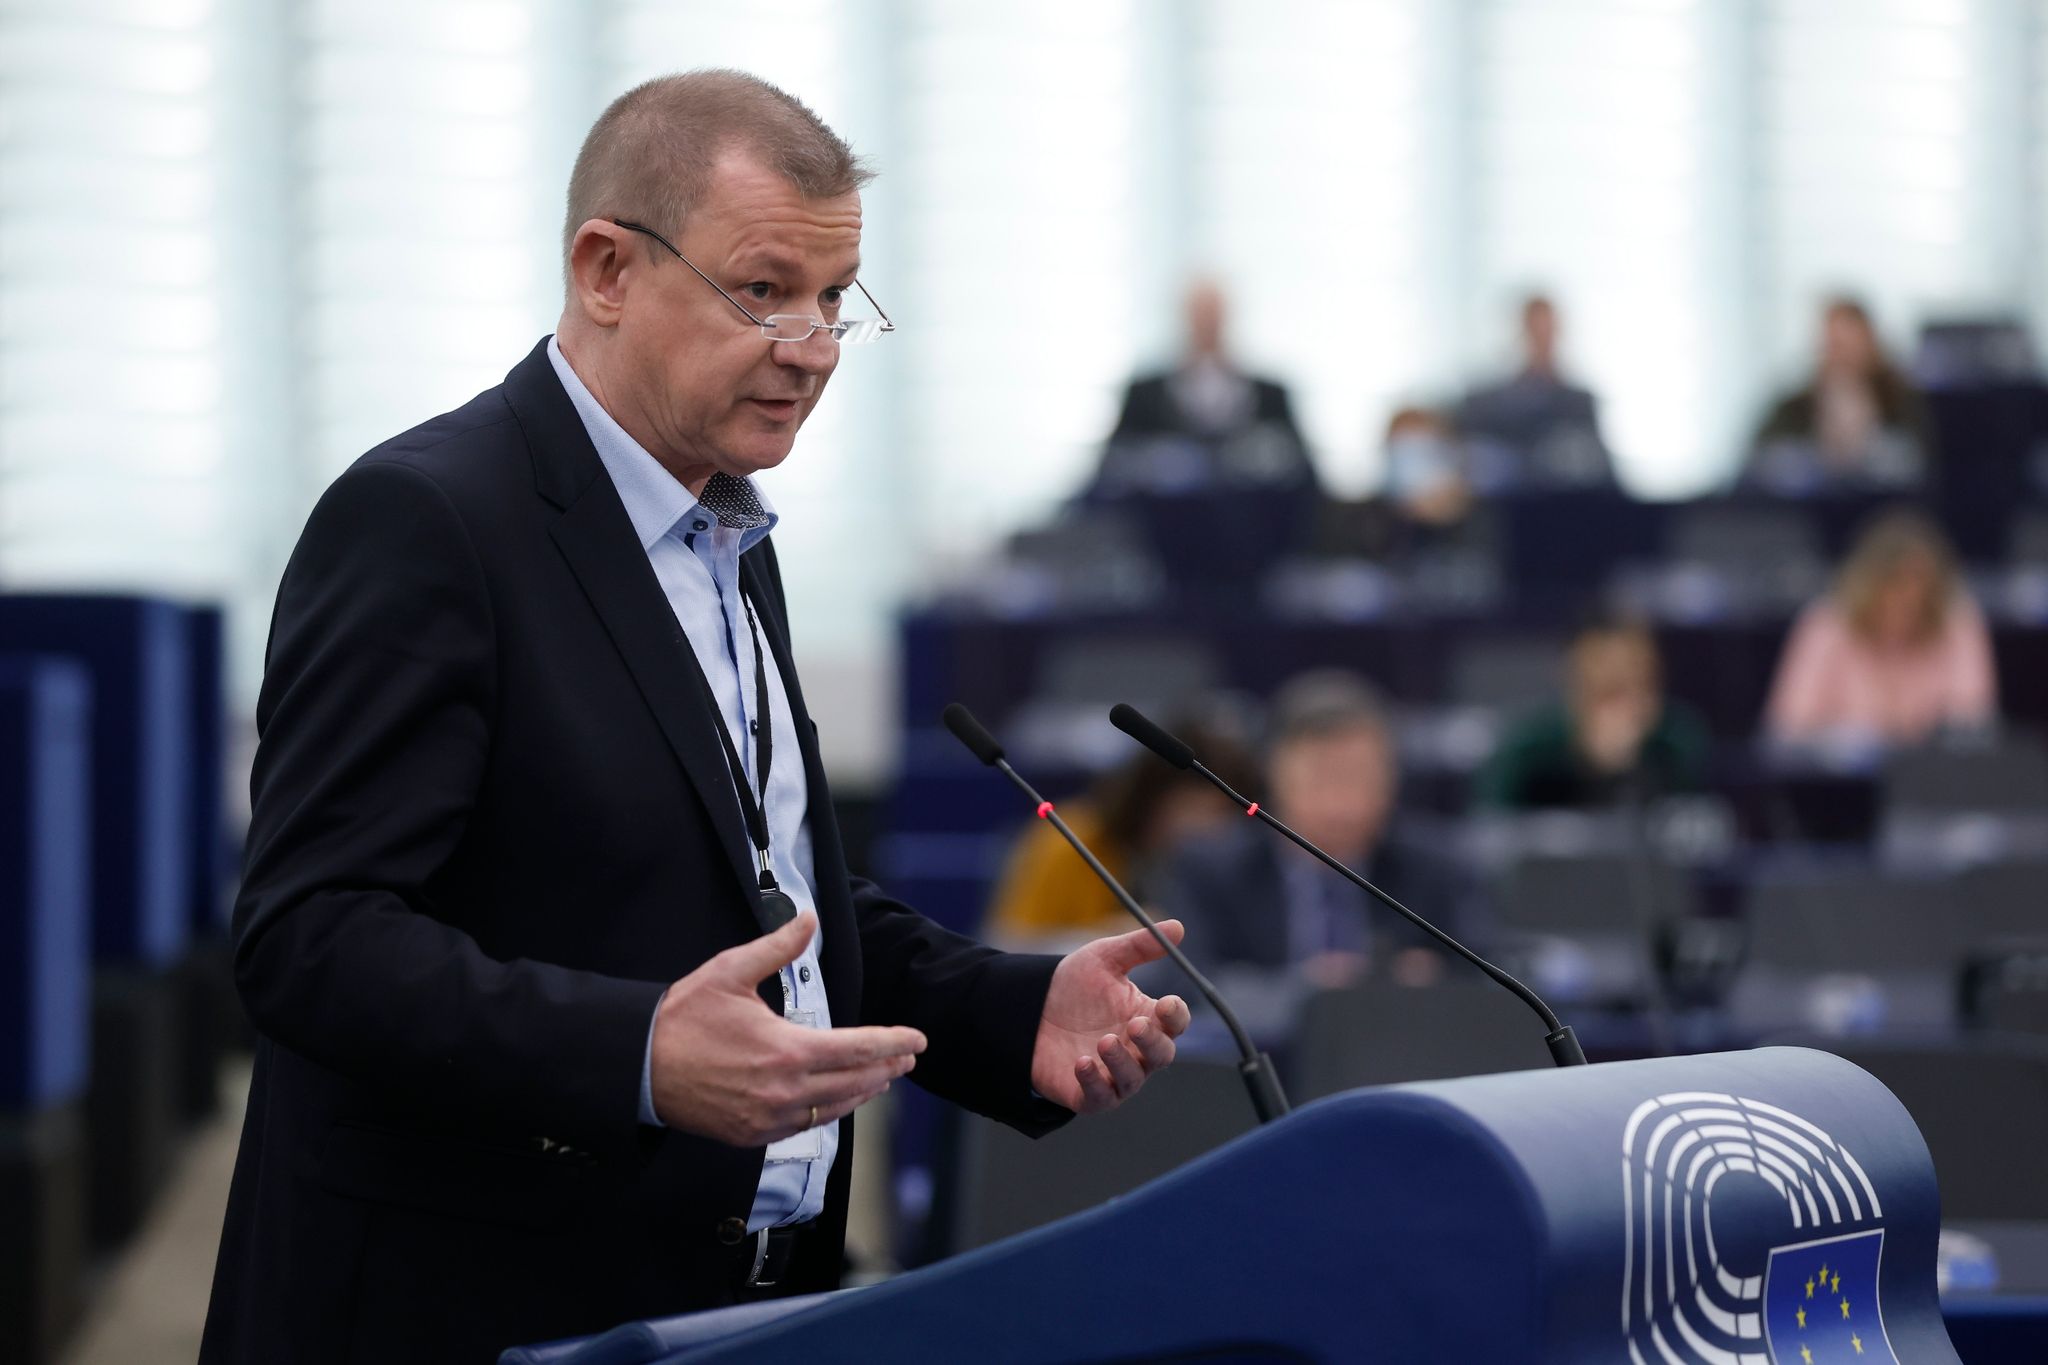 CDU-Politiker Pieper verzichtet auf EU-Amt nach Kritik